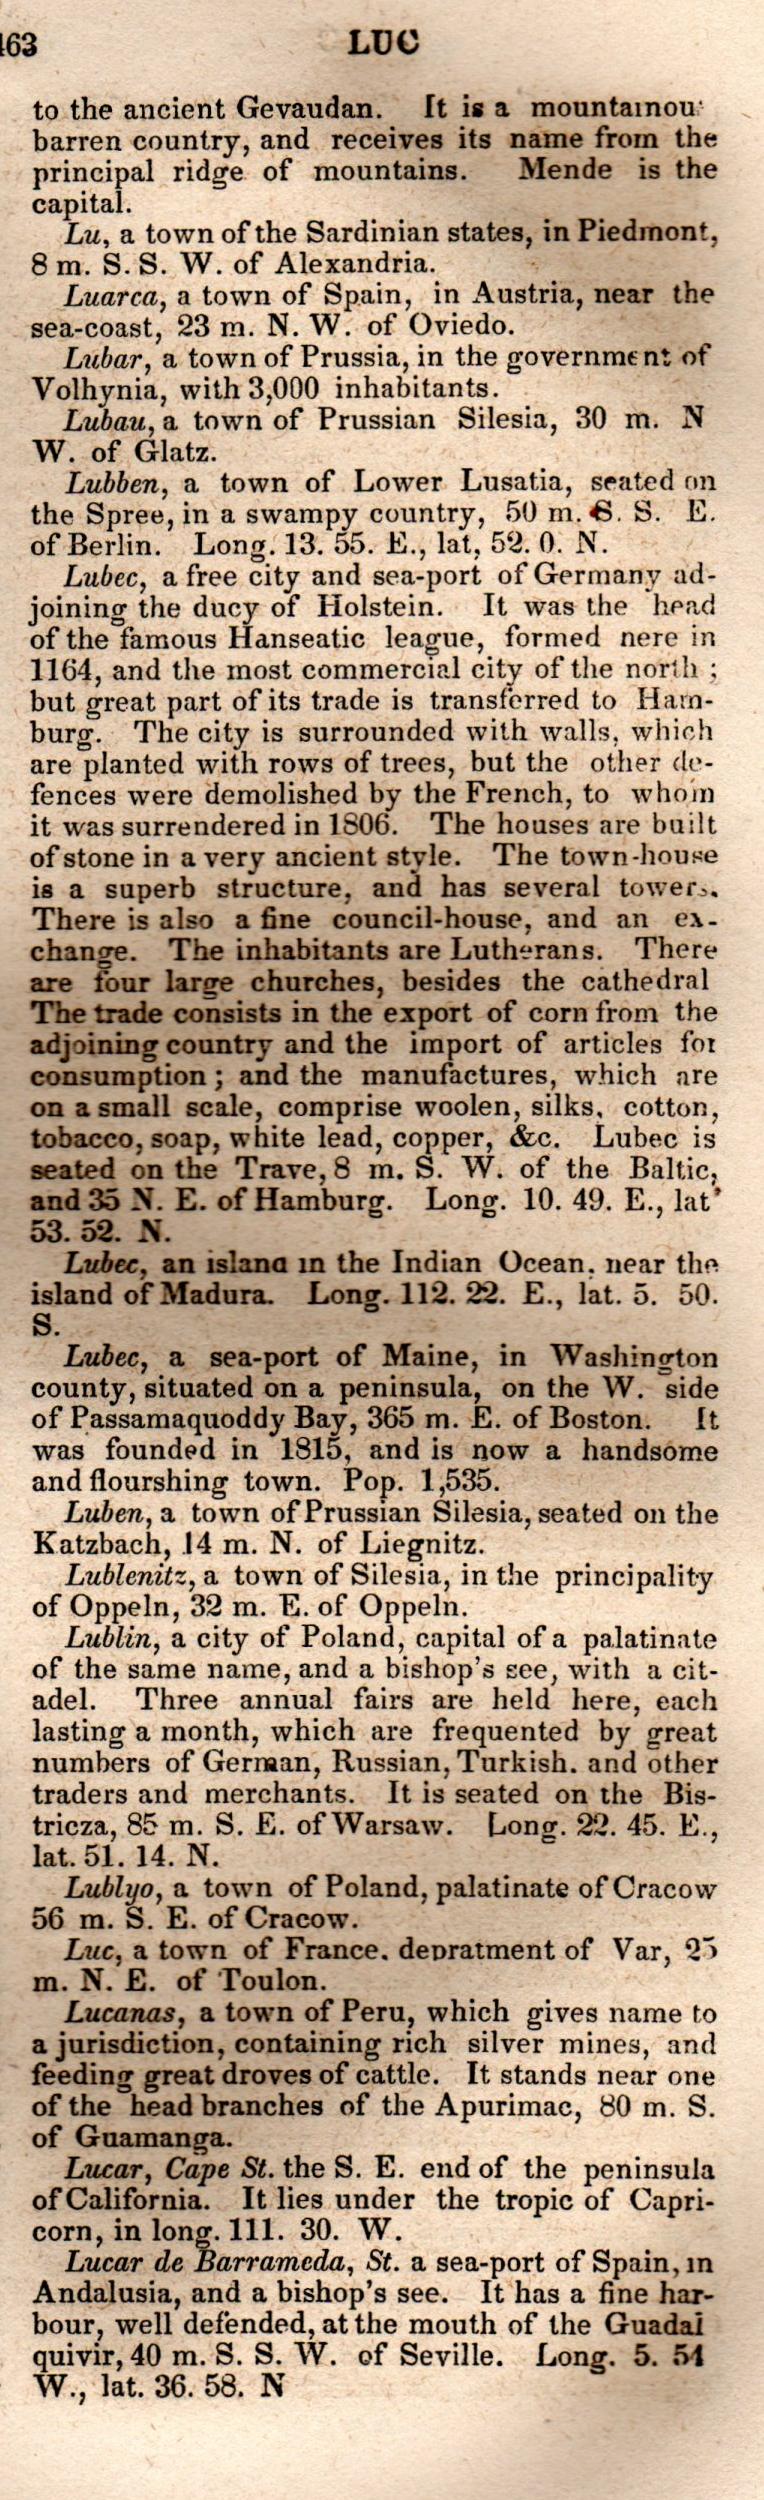 Brookes’ Universal Gazetteer (1850), Page 463 Right Column